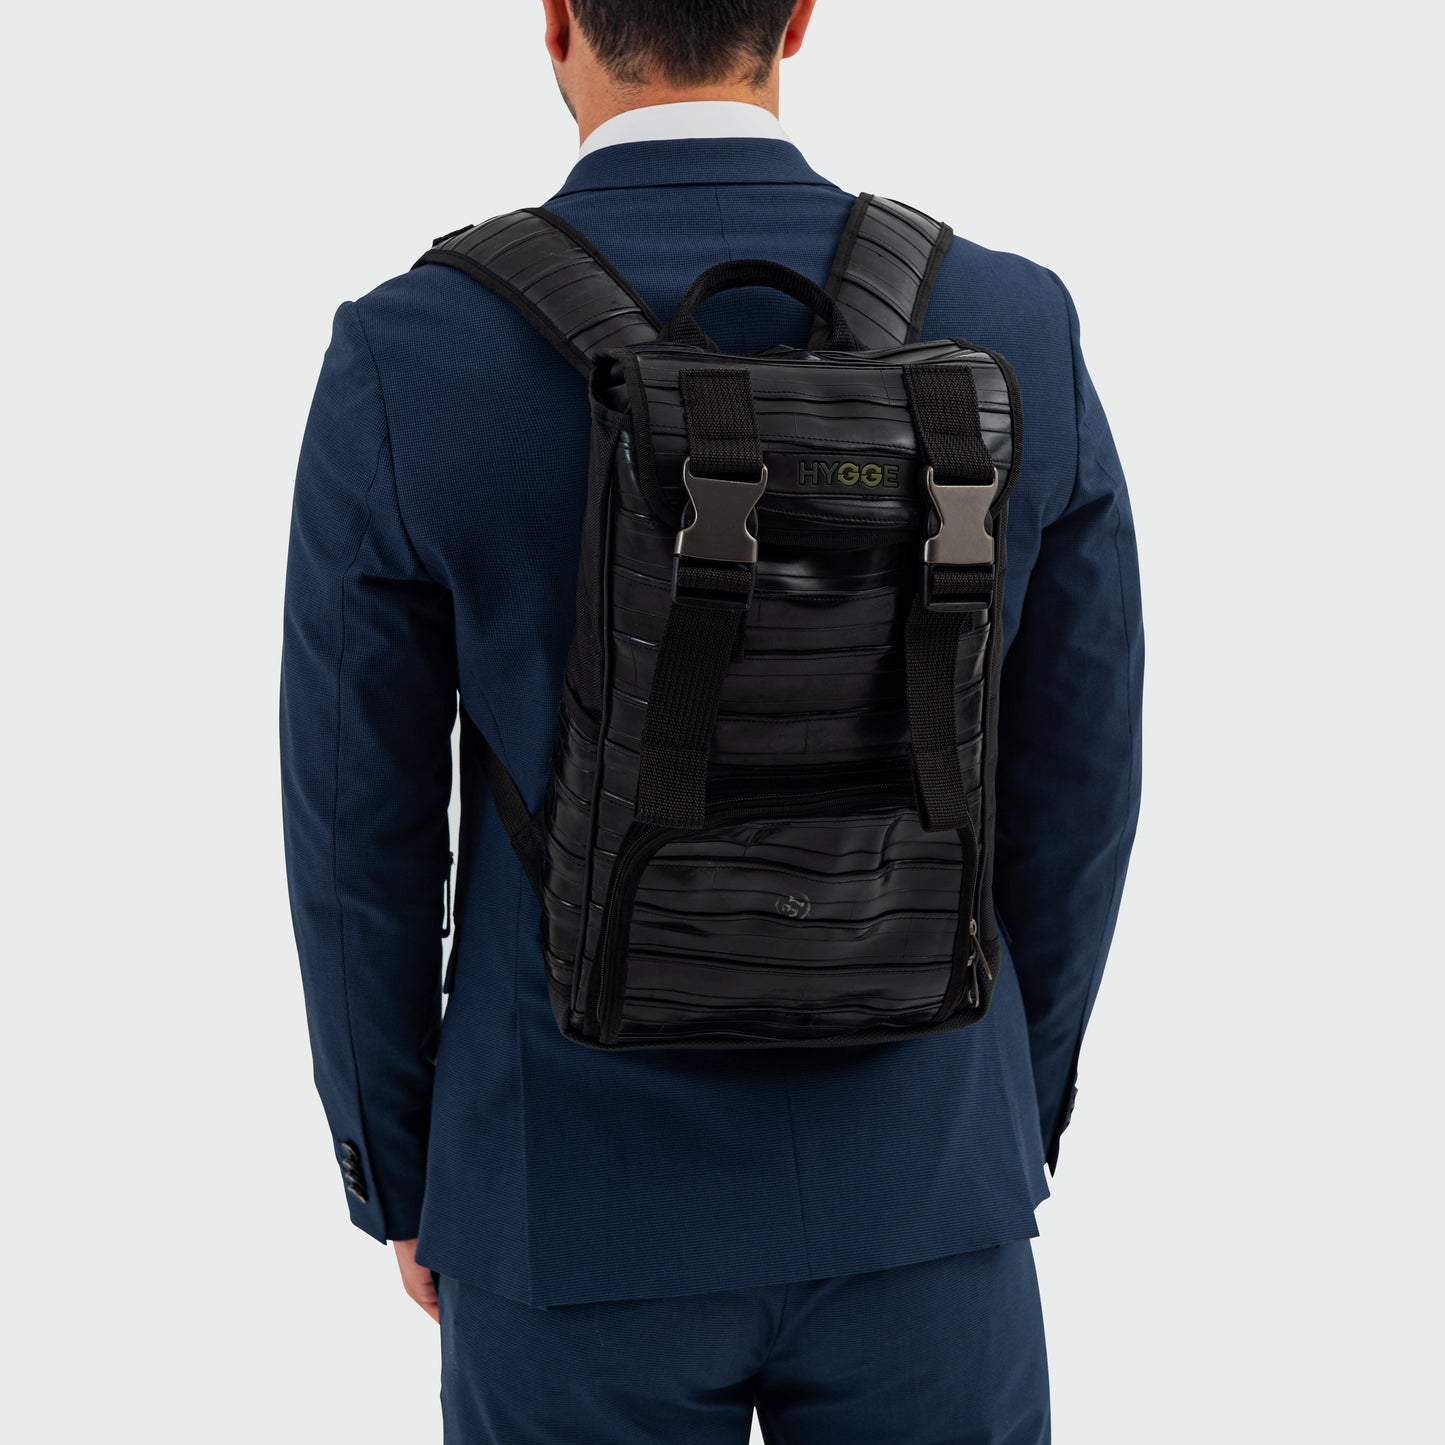 Backpack 5RW